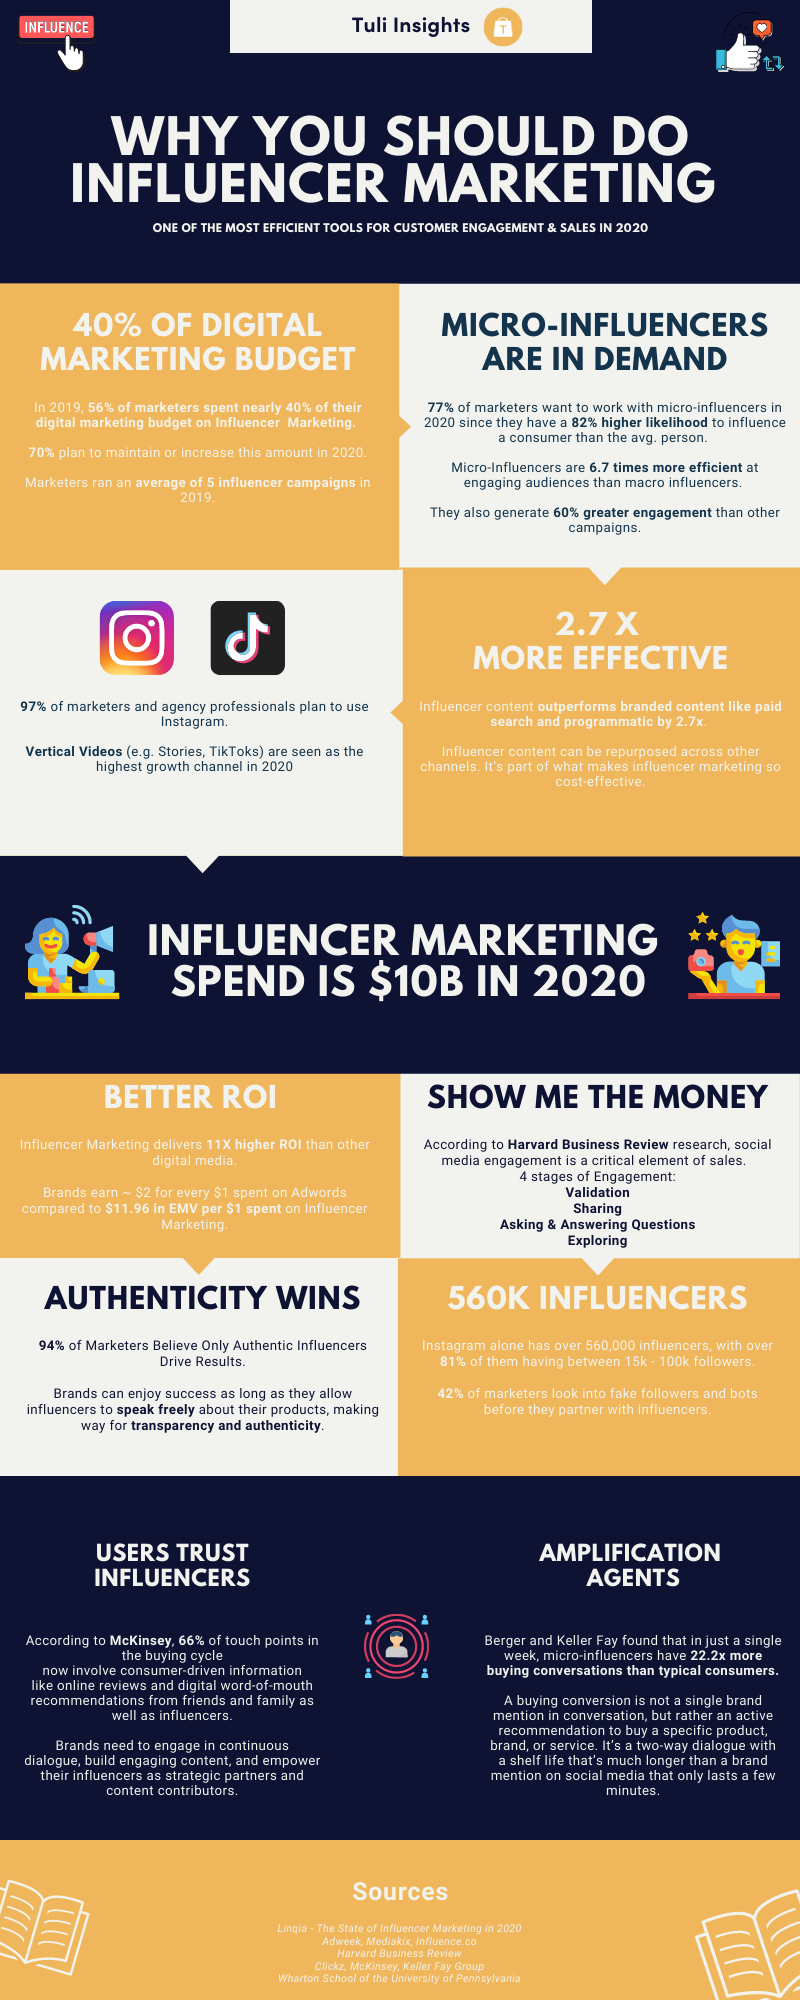 Influencer Marketing Infographic 2020